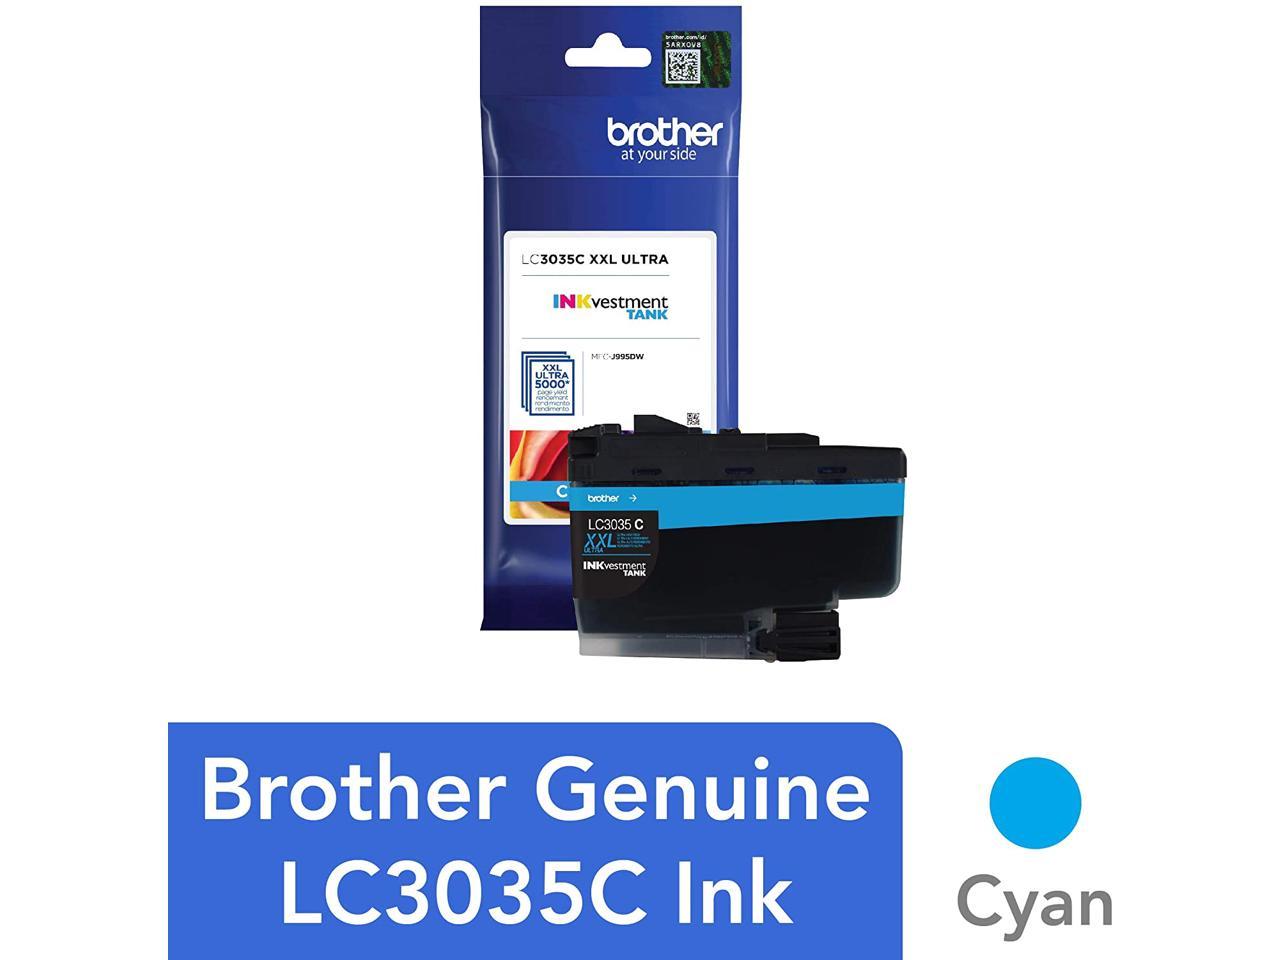 Brother Genuine LC3035C Single Pack Ultra High-yield Cyan INKvestment Tank Ink Cartridge - Inkjet -